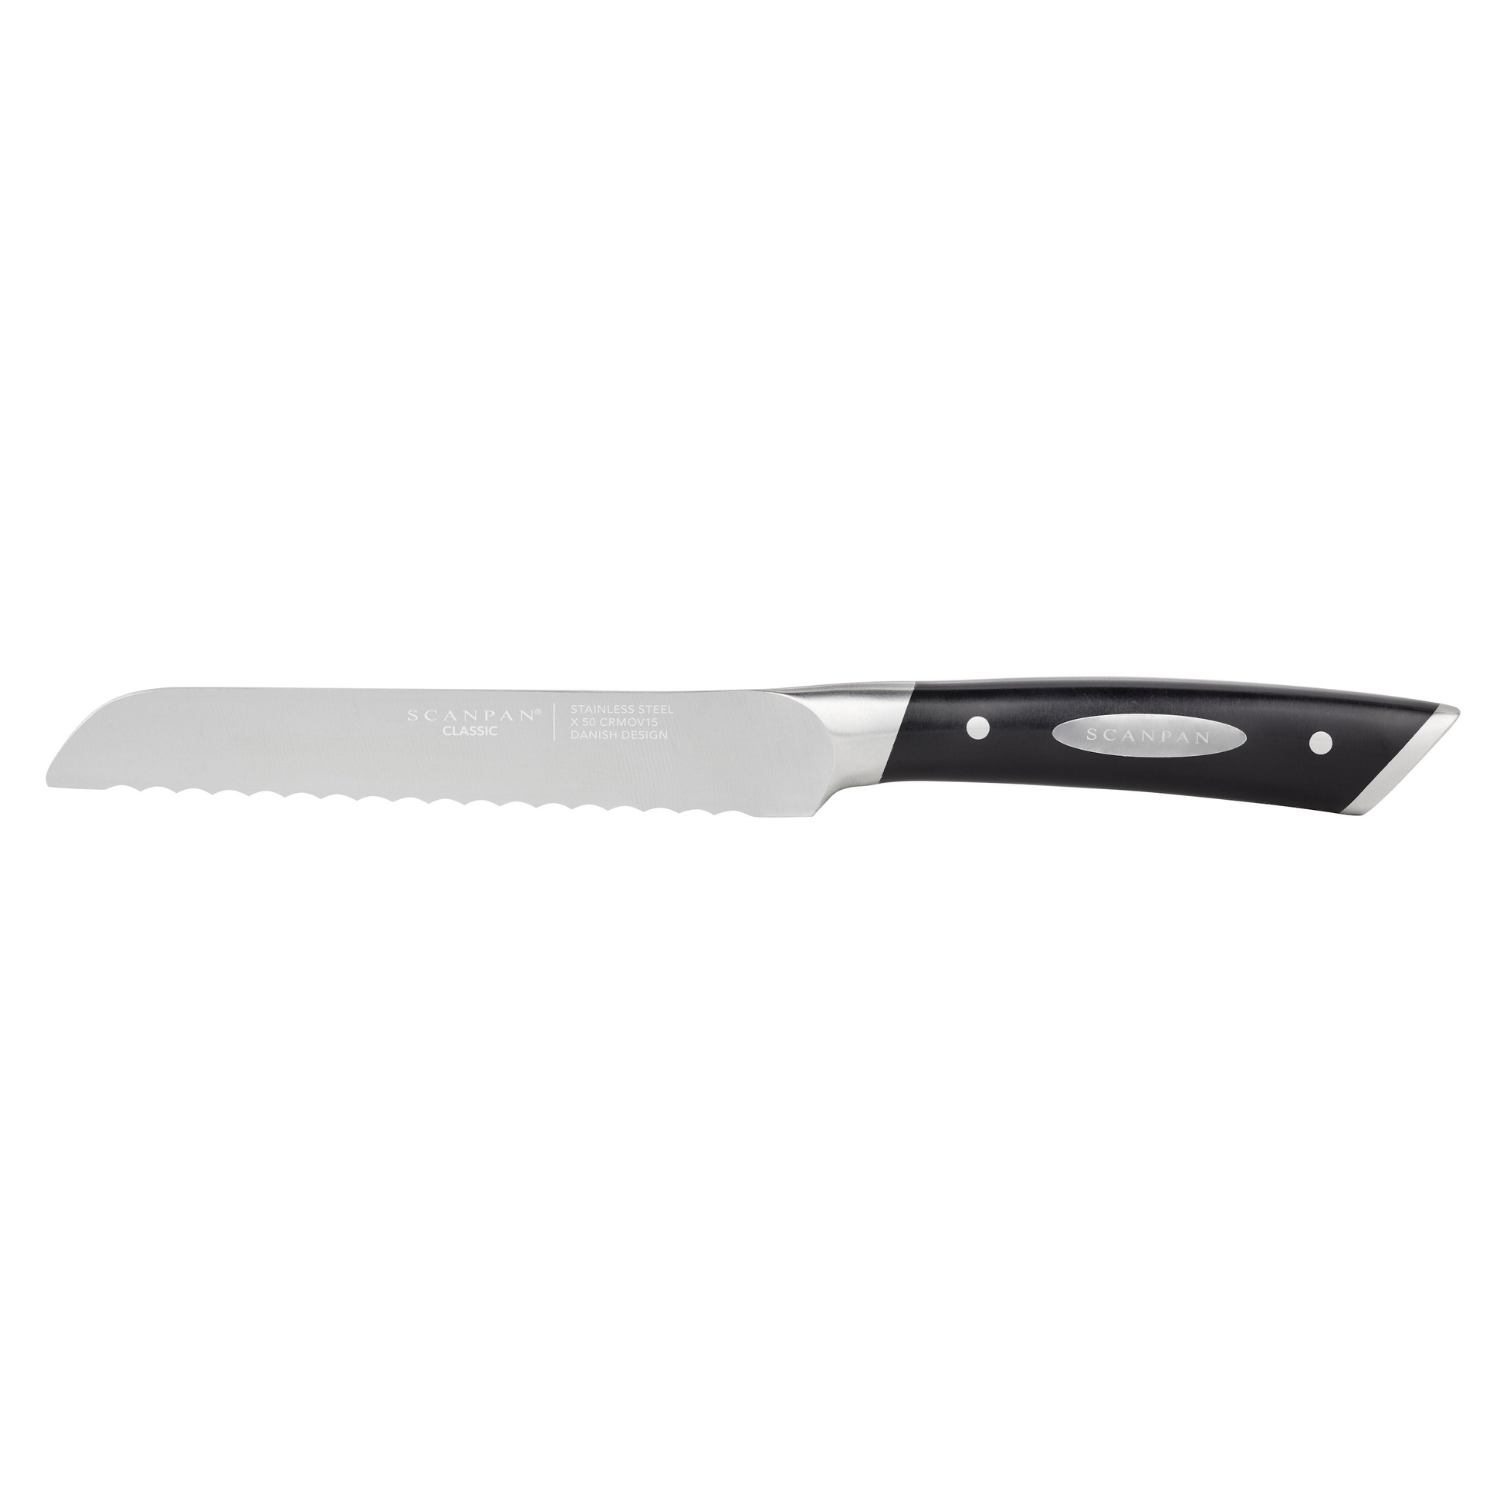 SCANPAN Classic Knives - Baguette/Salami Knife 14cm